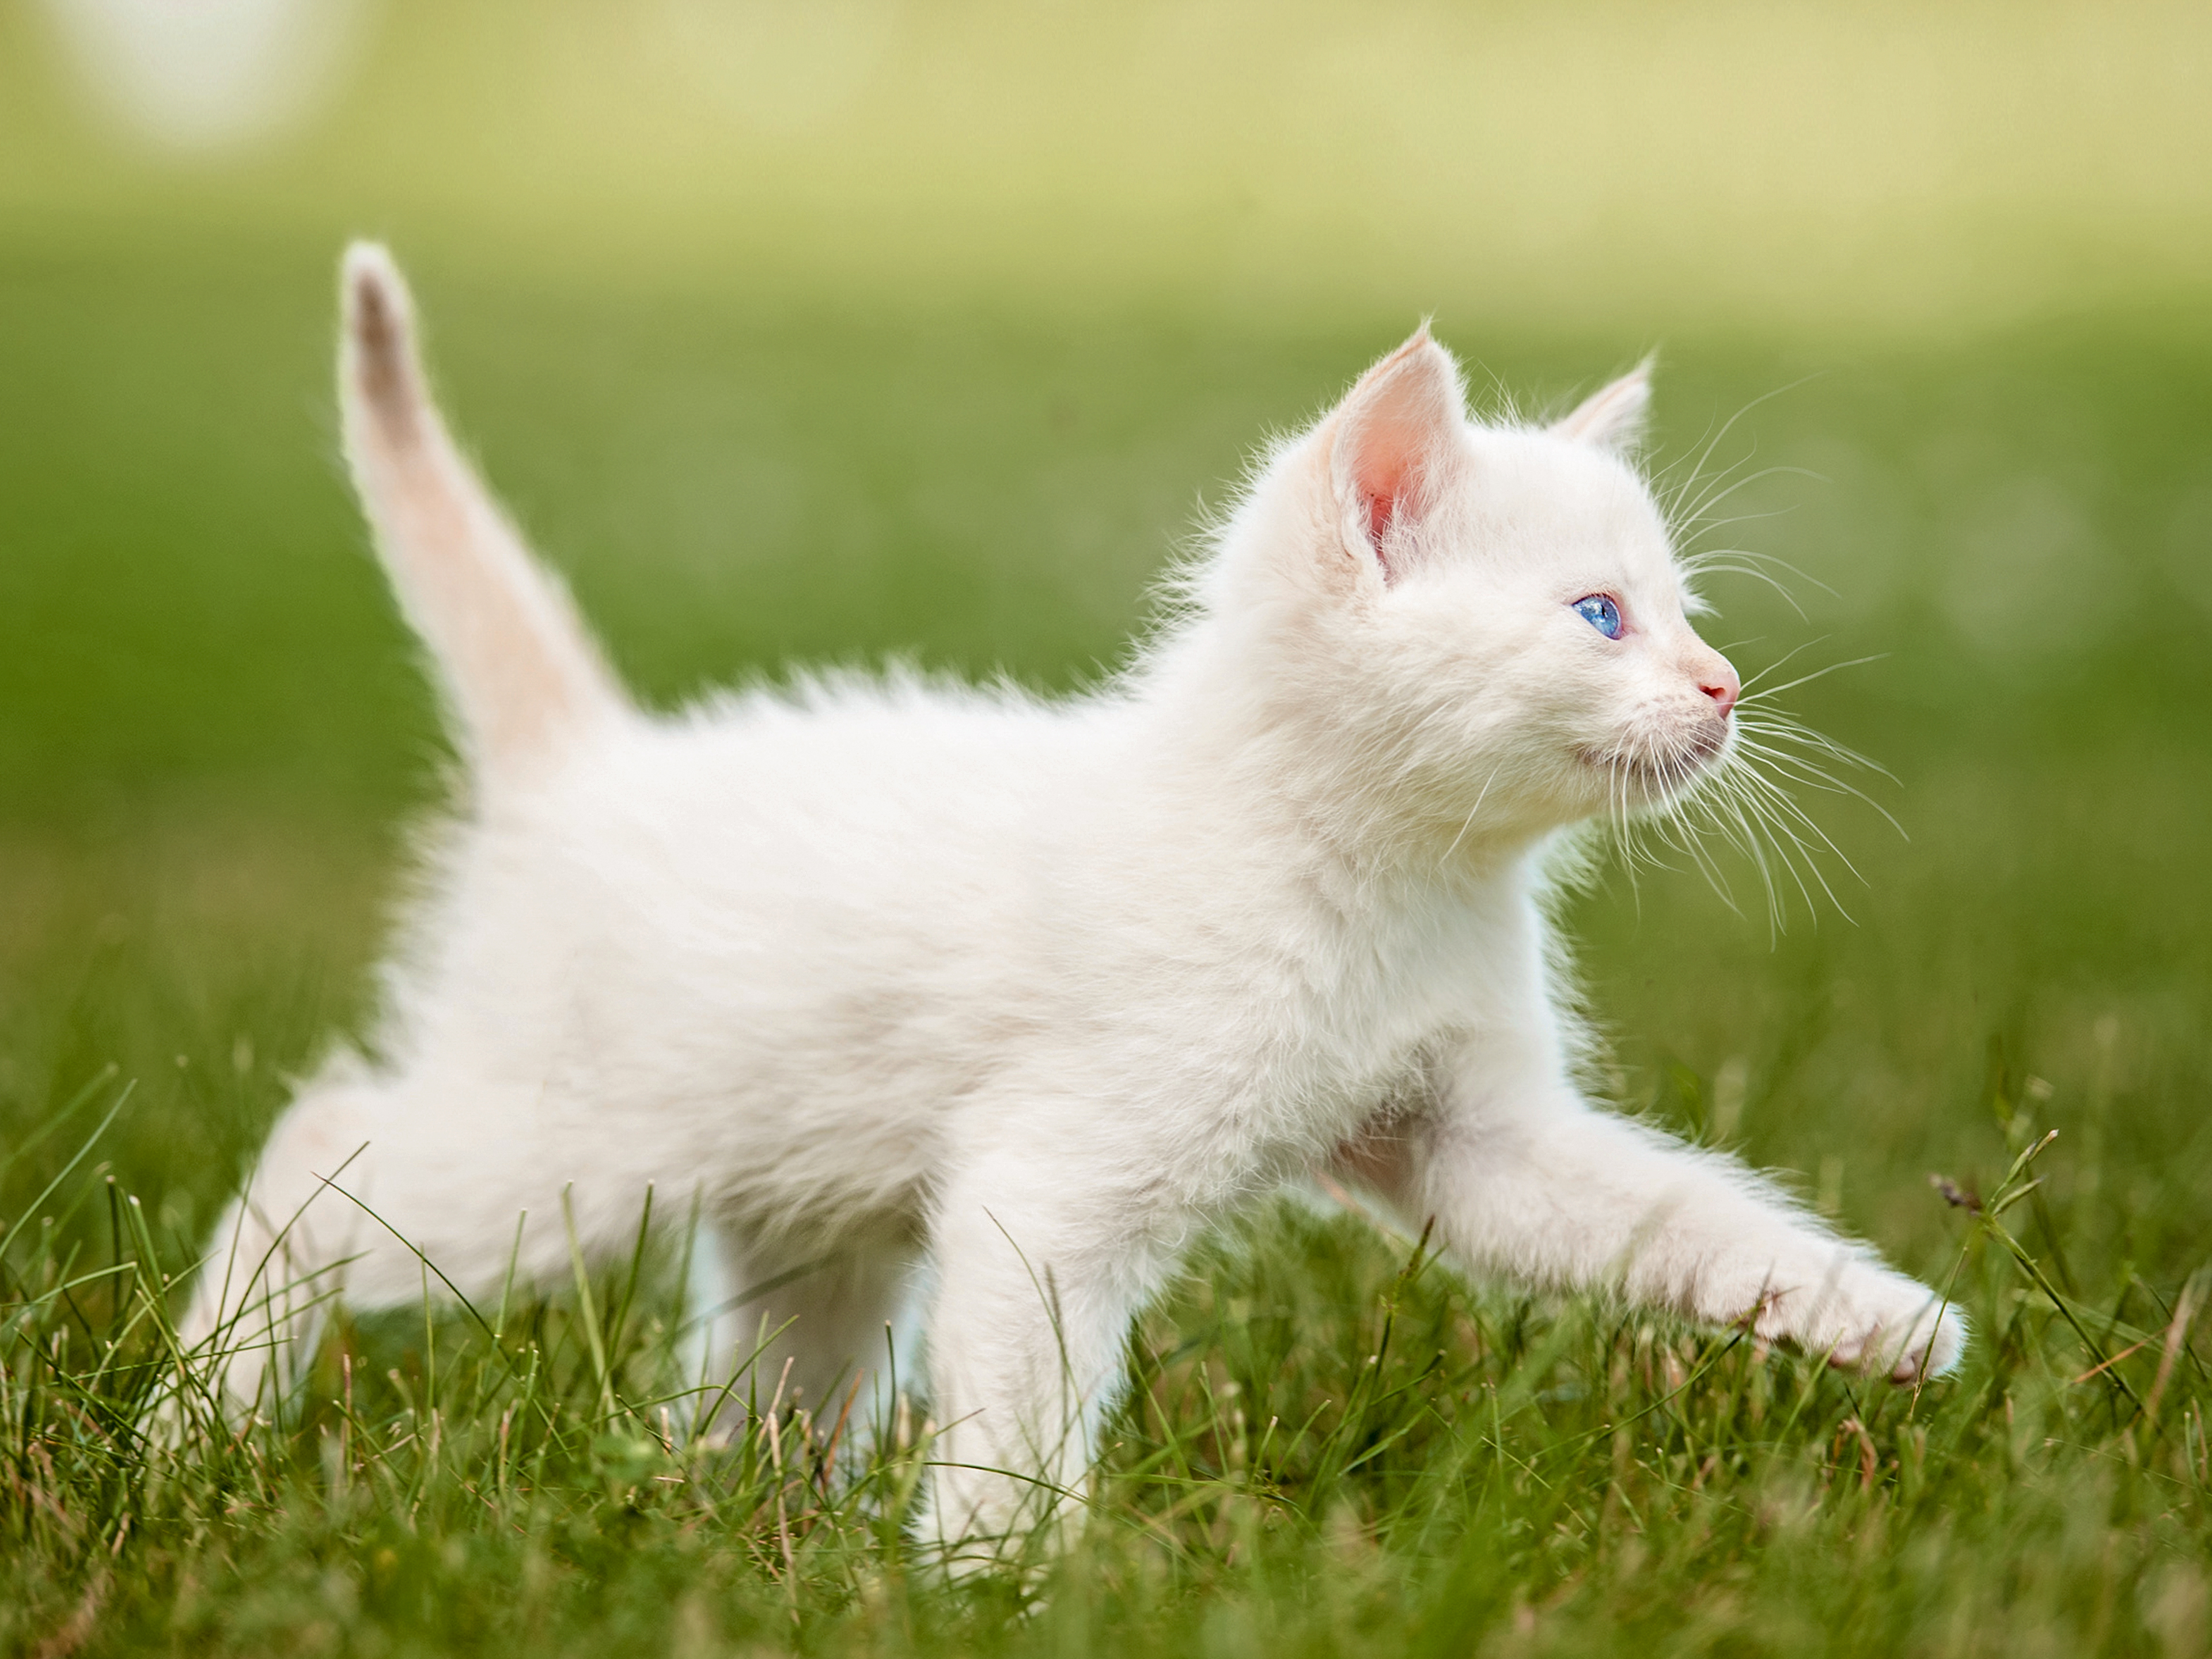 White kitten walking outdoors in grass